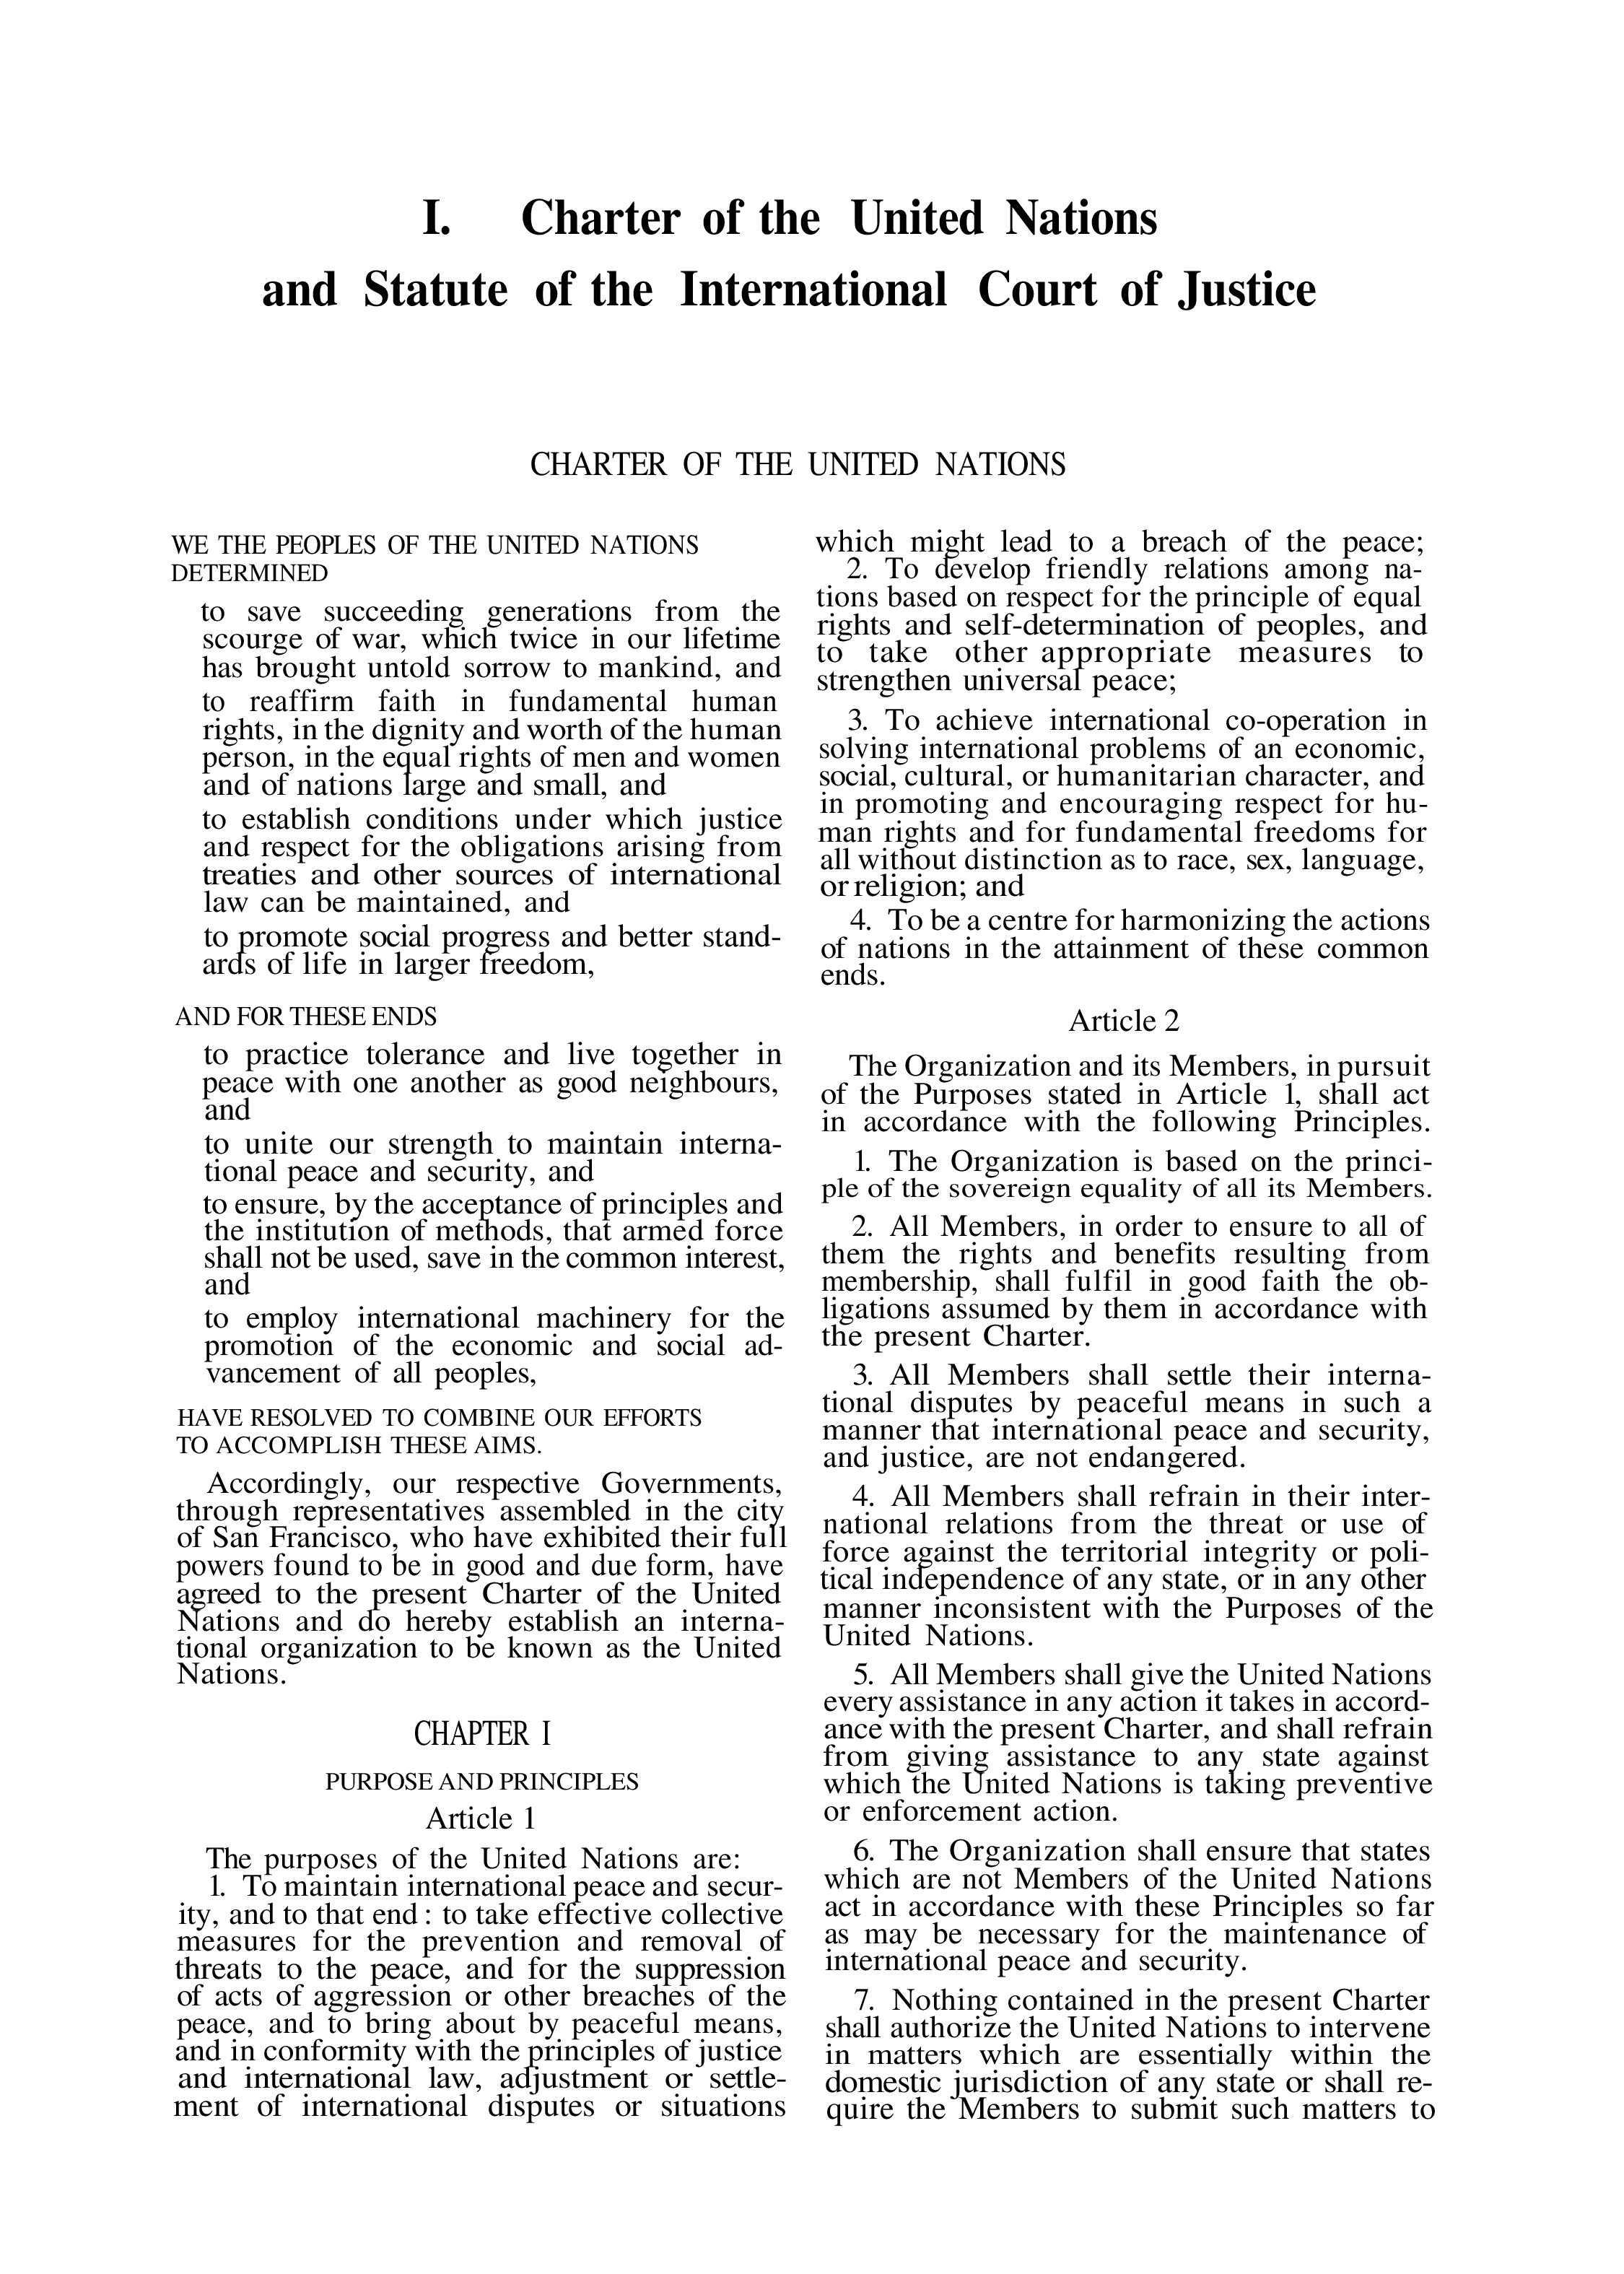 YUN Volume_Page 1946-47_863